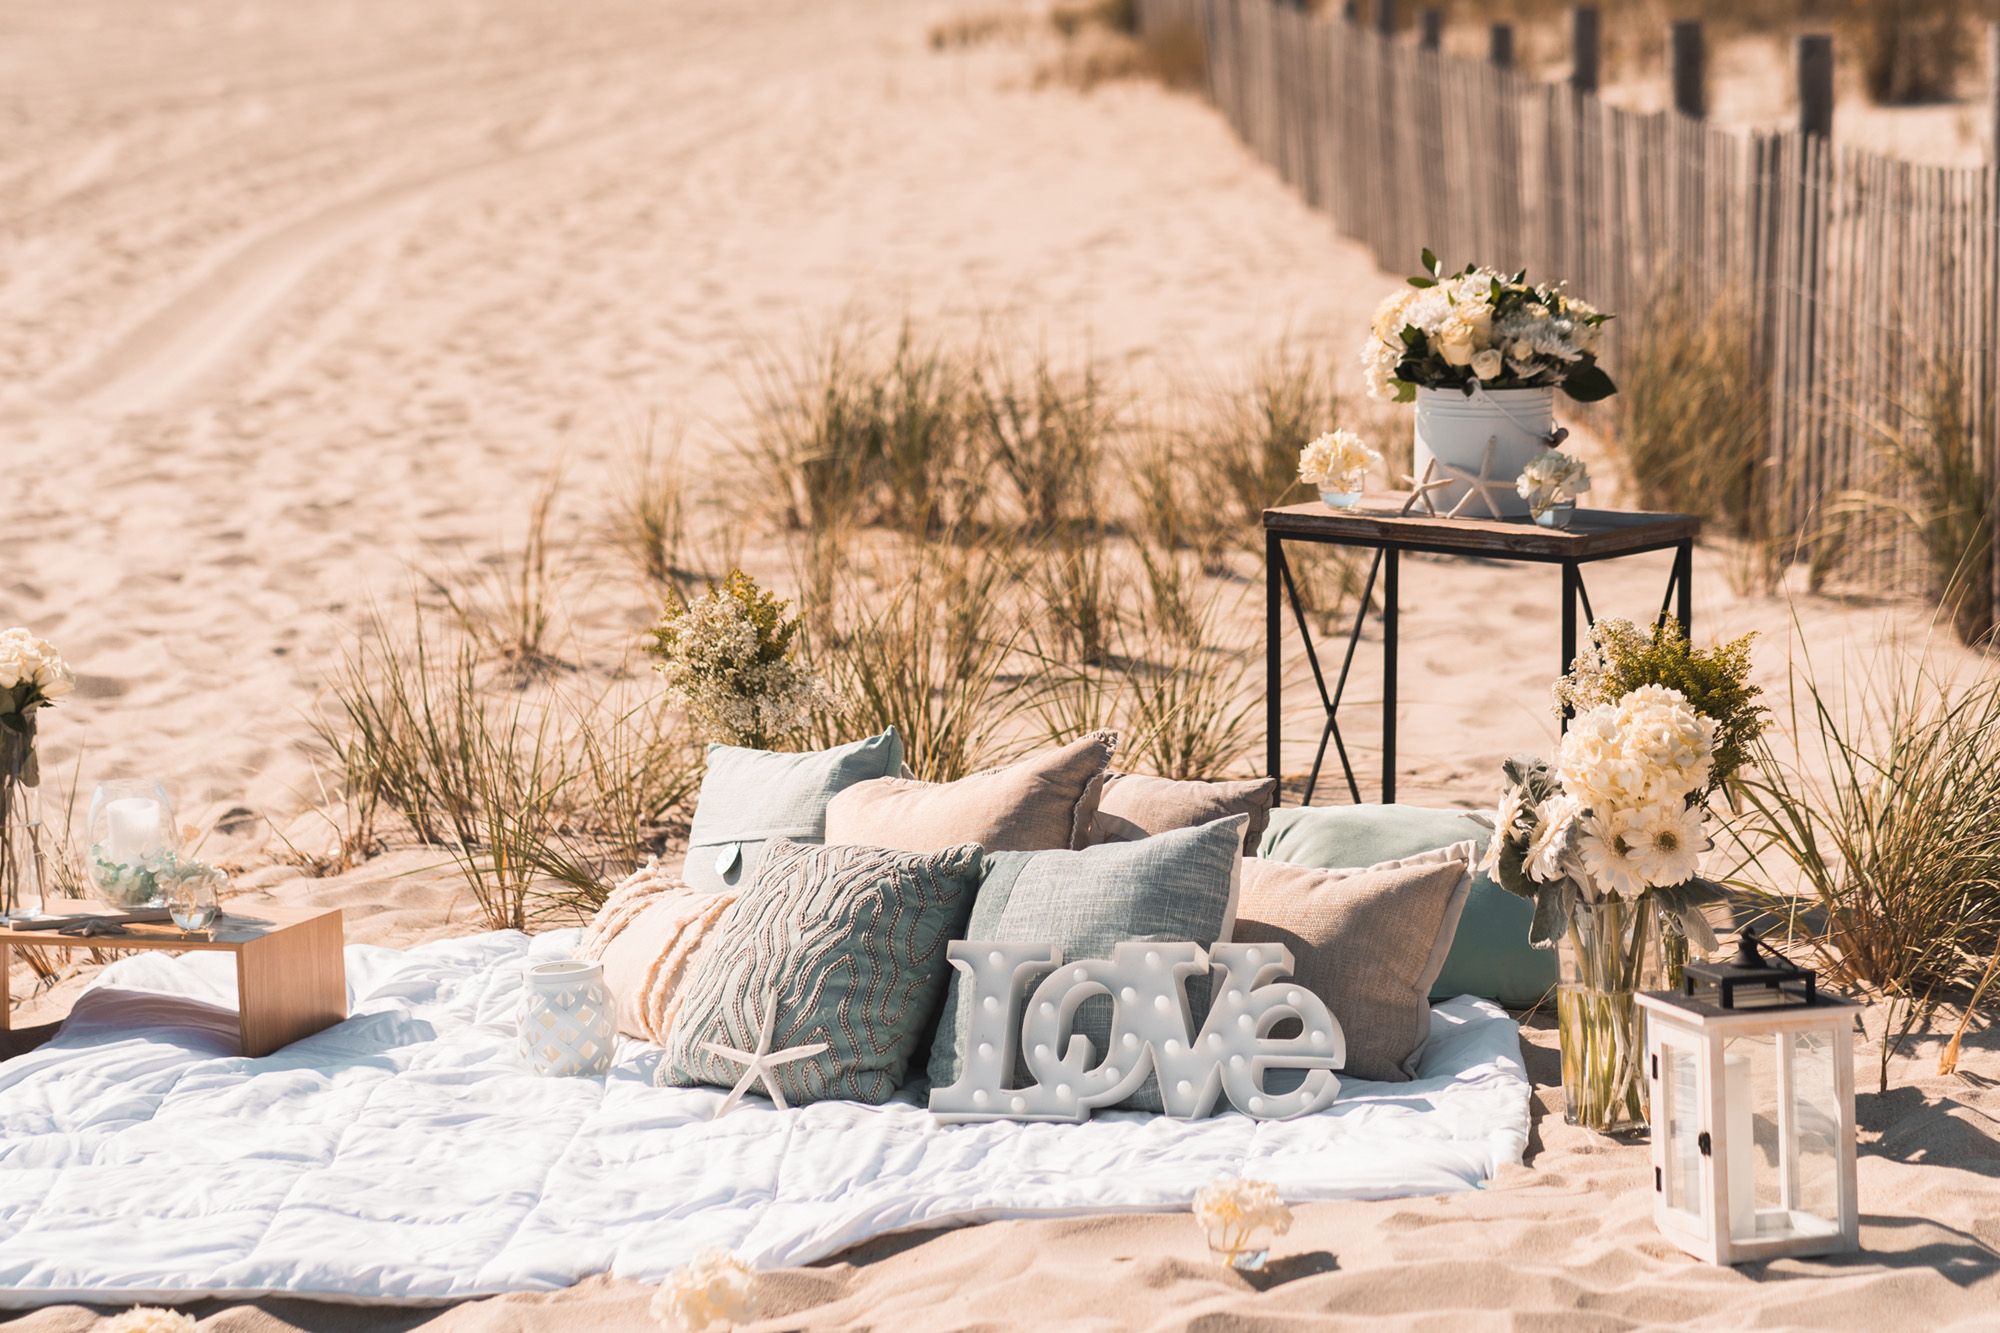 Romantic-beach-setup